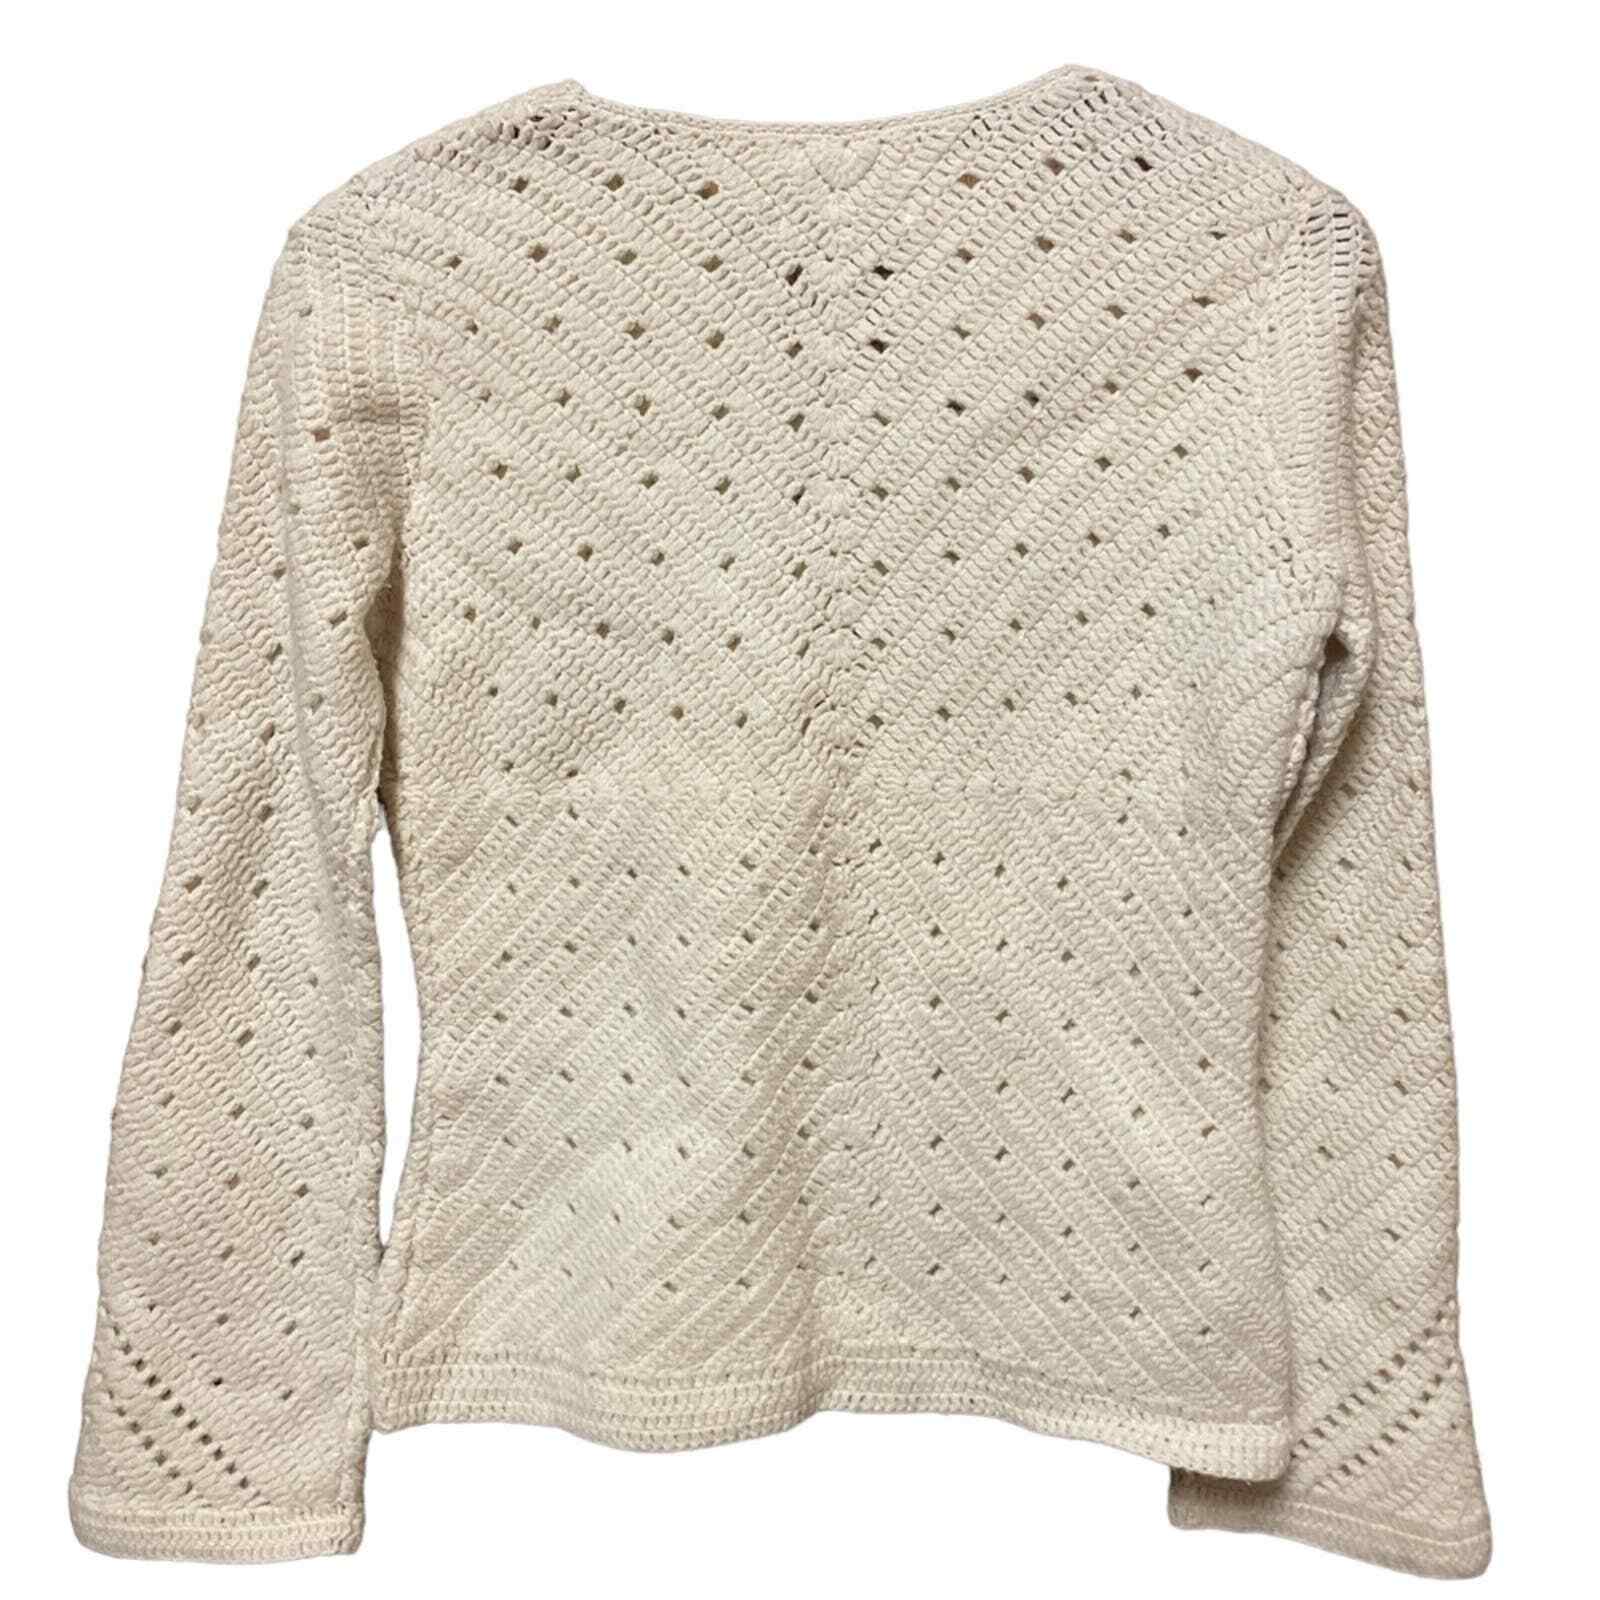 Hand Knit Ivory Cream Crochet Sweater Size M - image 3